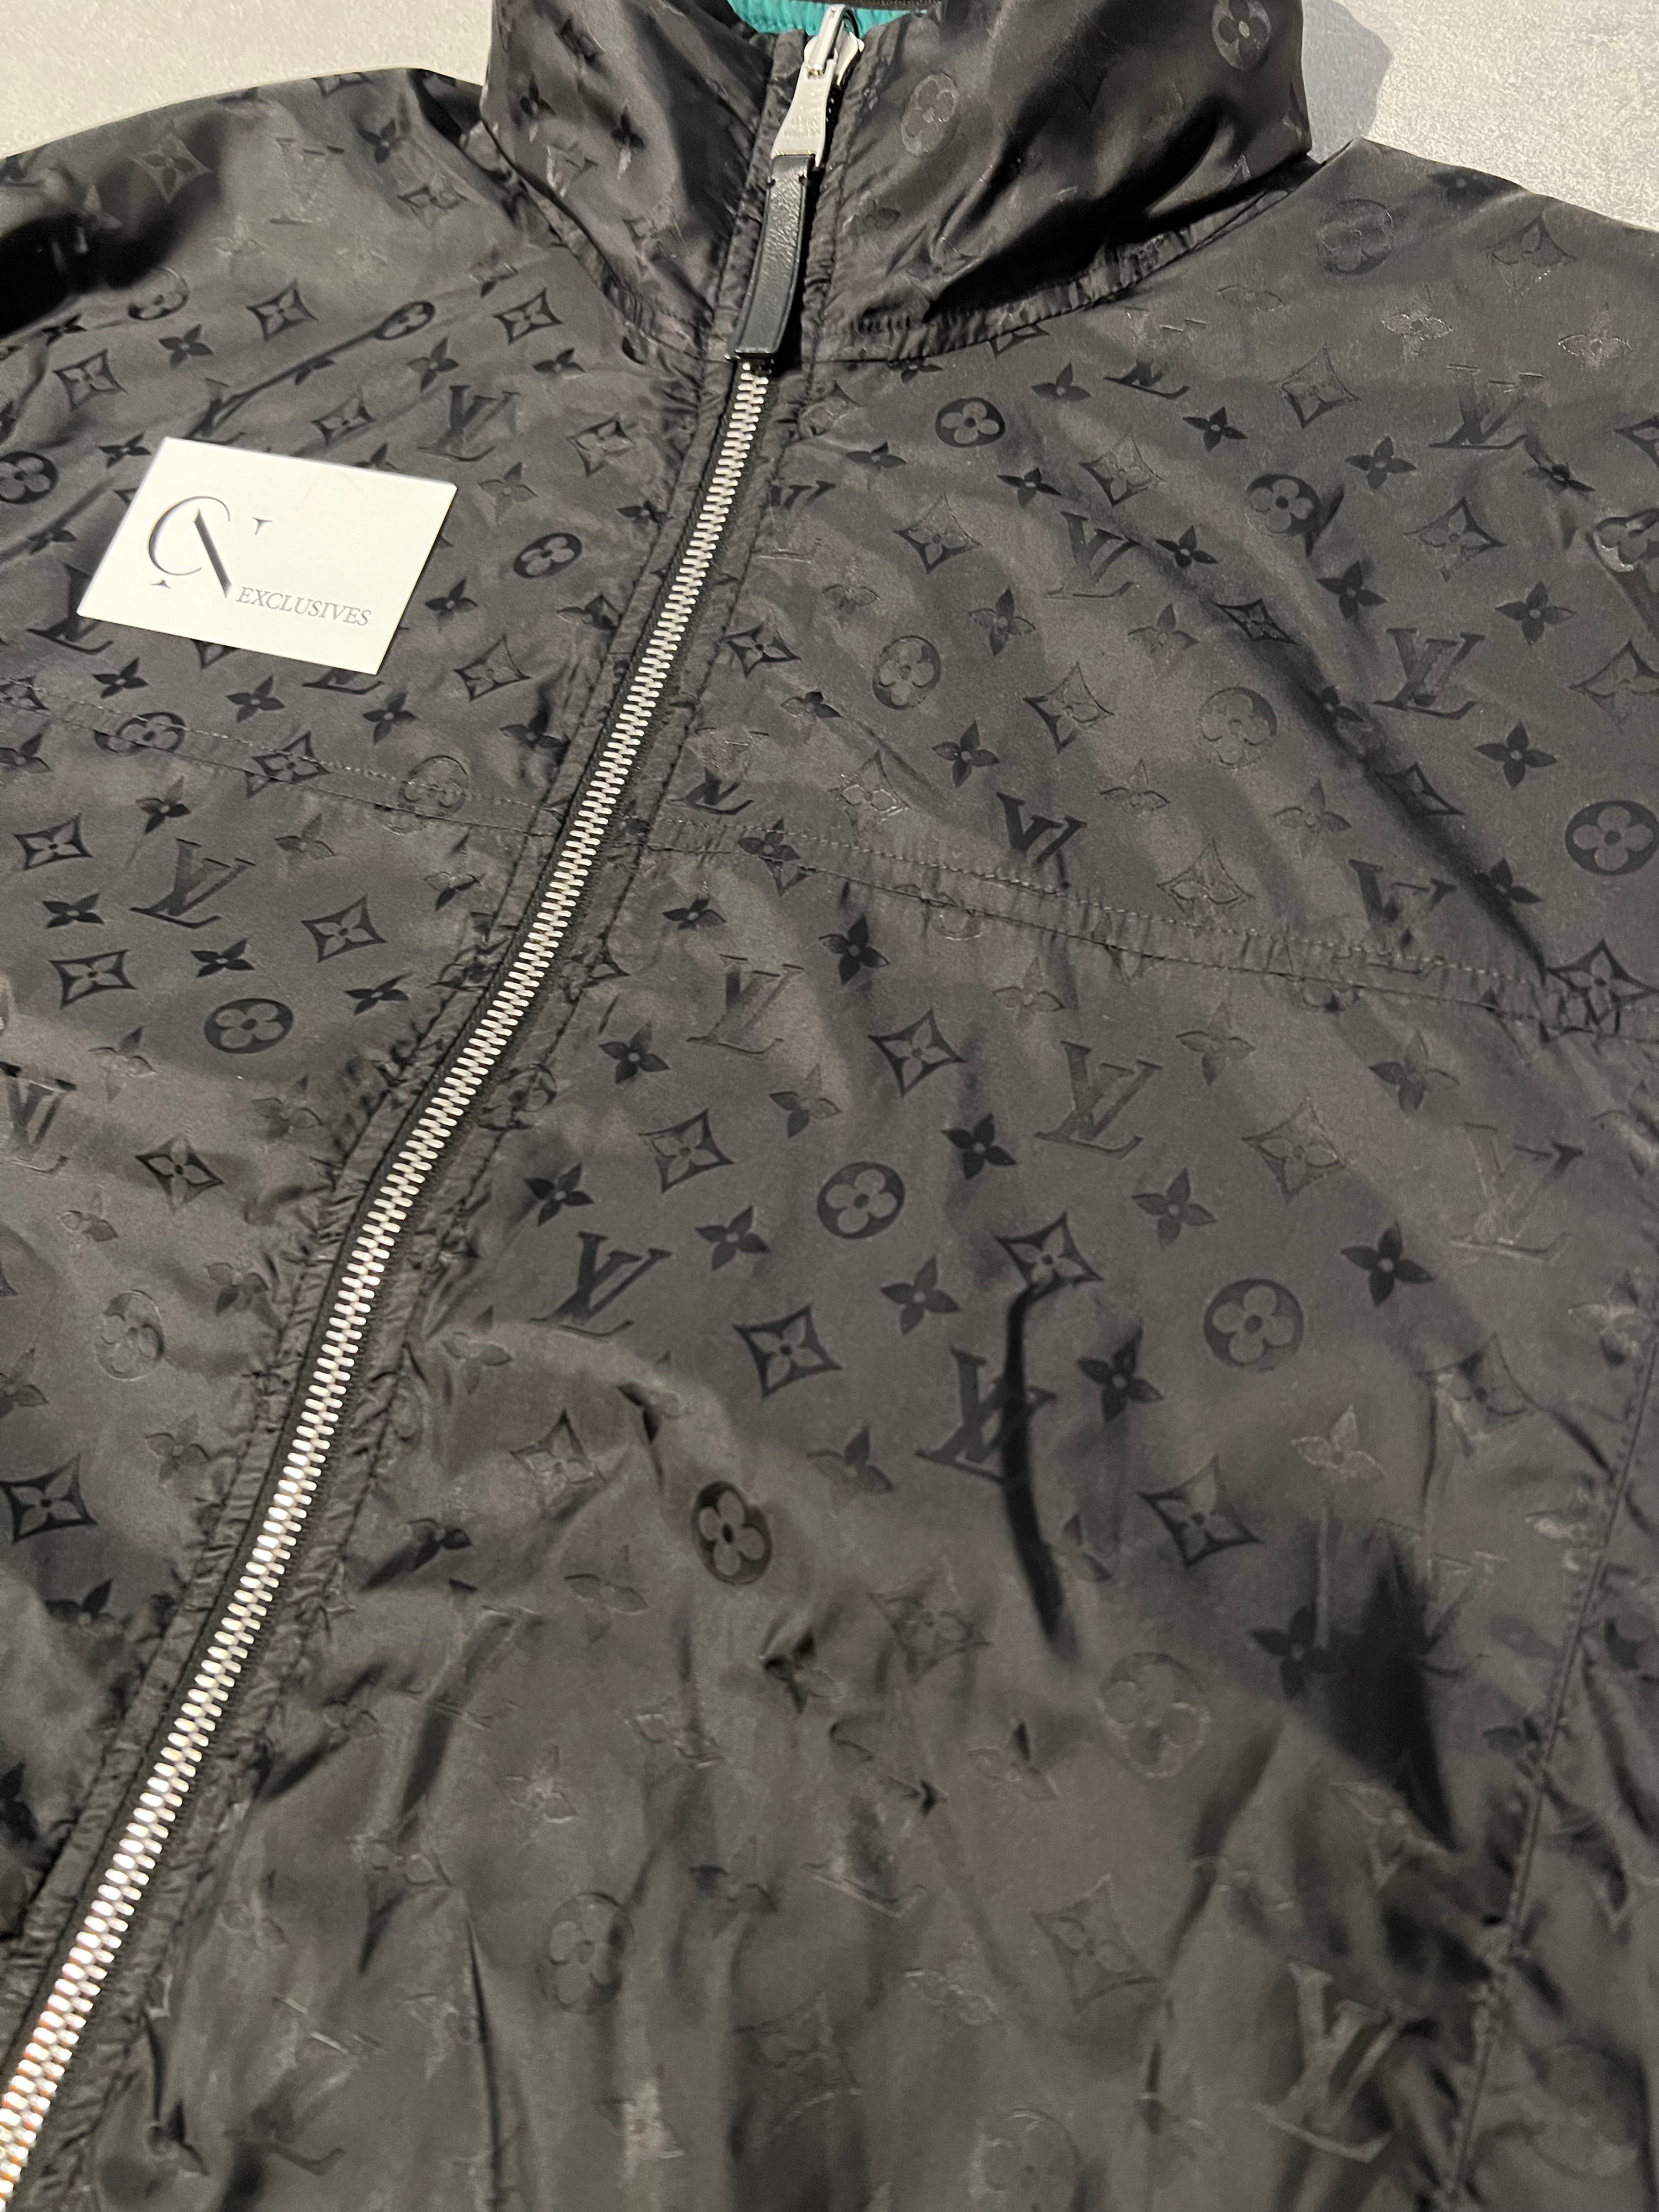 Louis Vuitton Monogram Windbreaker Jacket